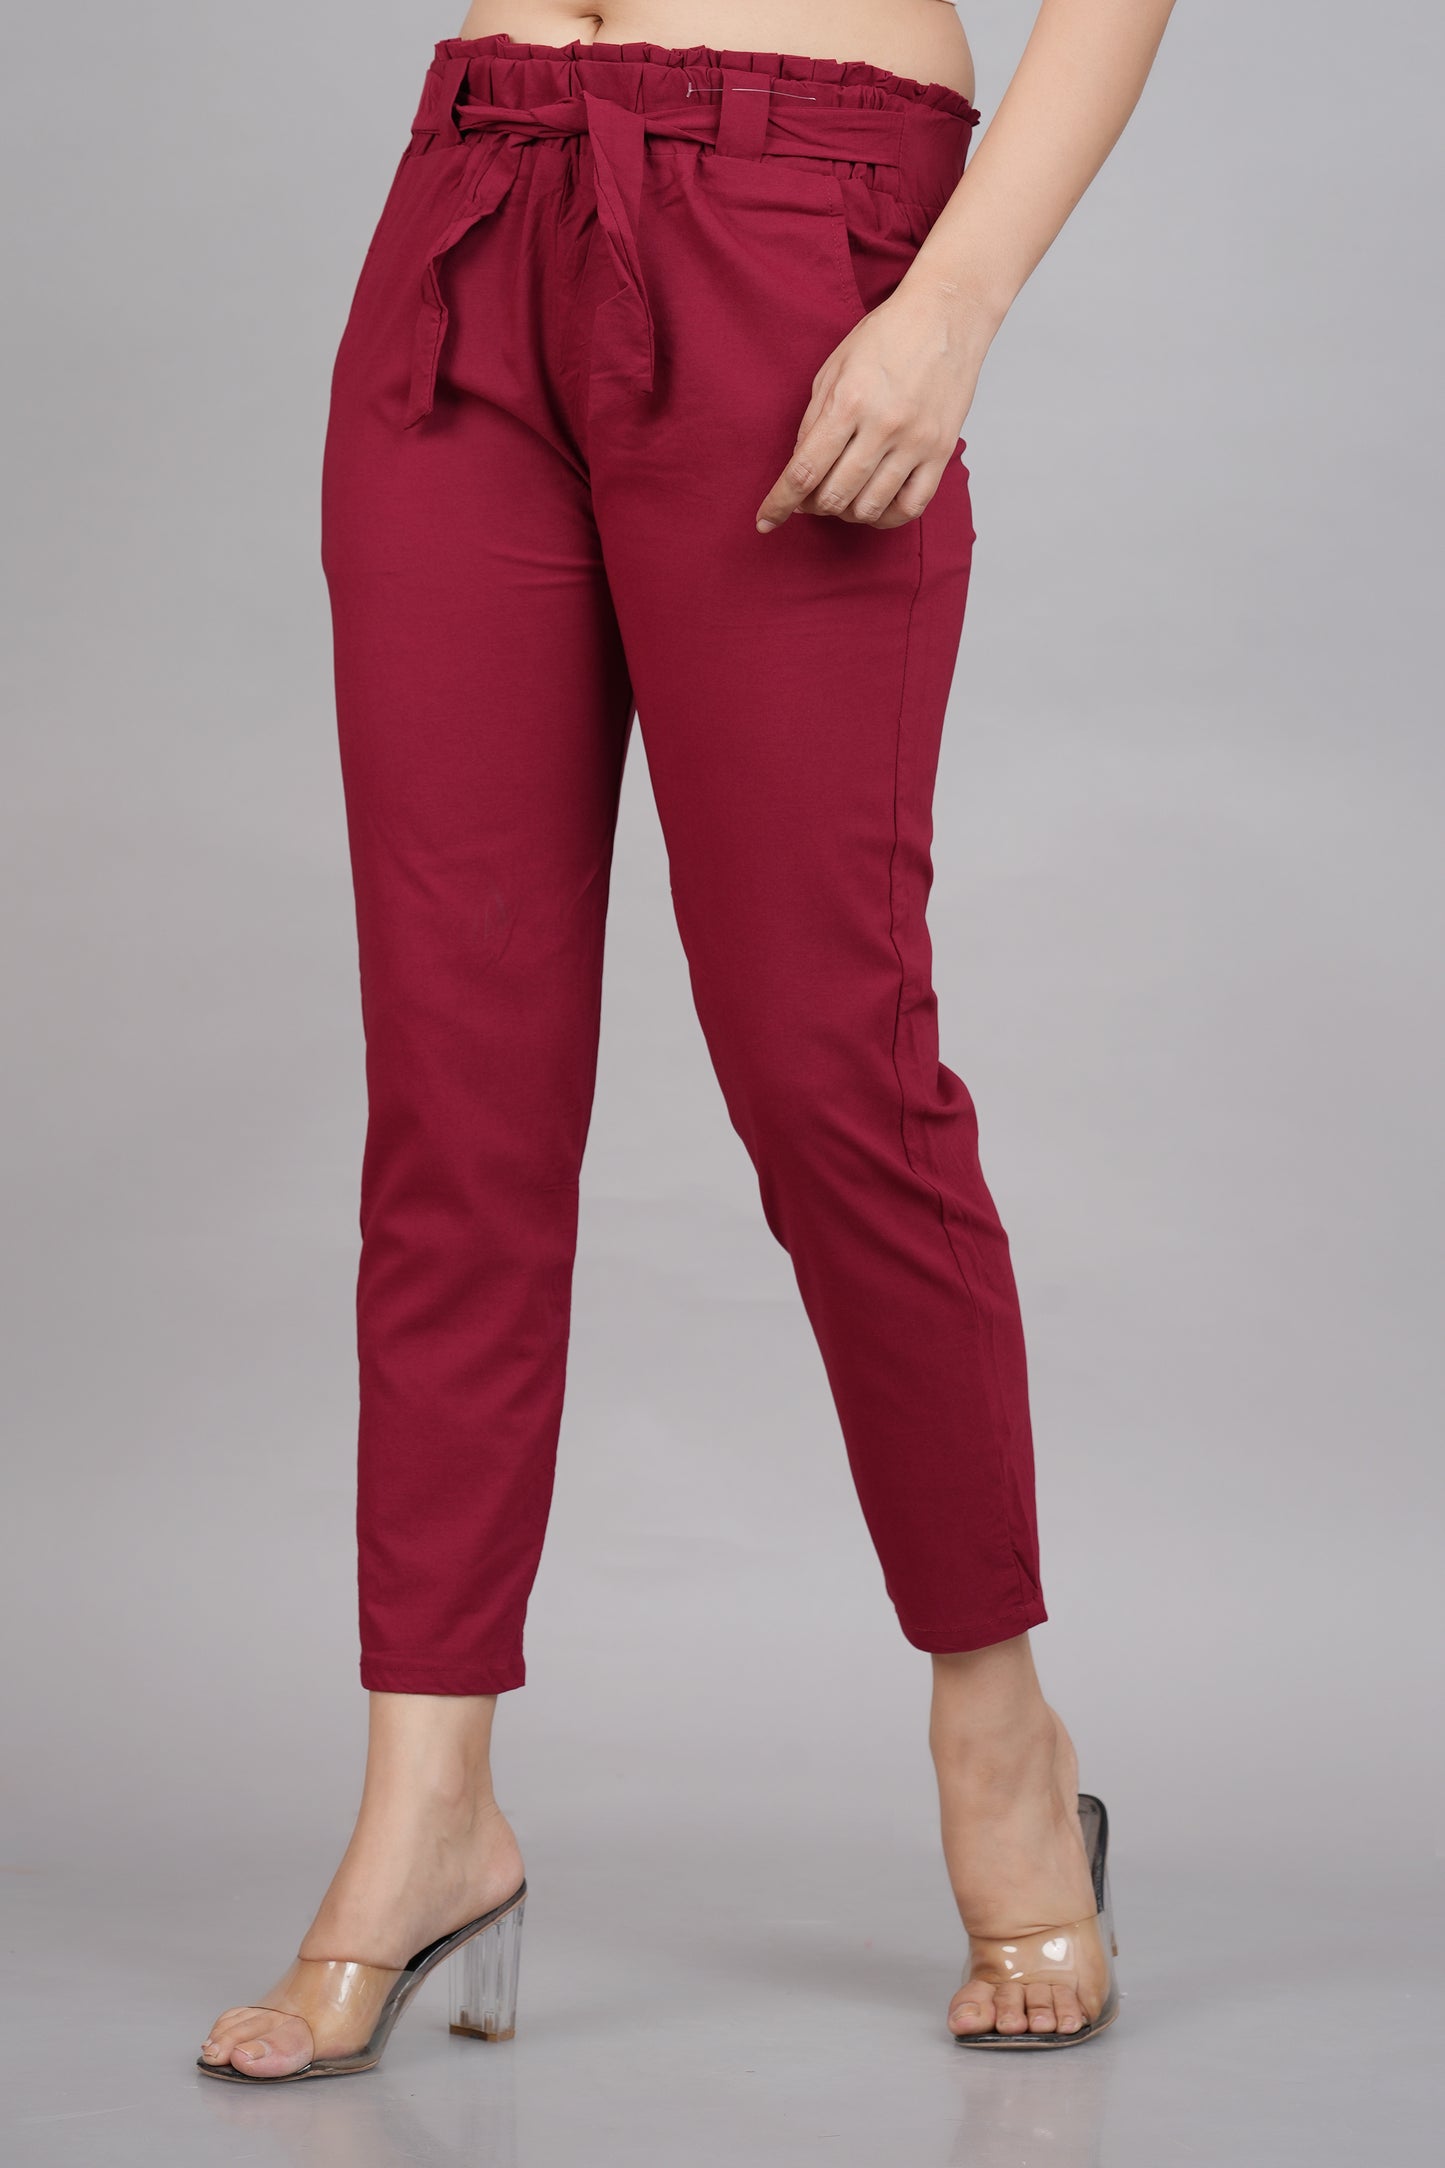 Yash Gallery Women's Lycra Regular Fit Casual Trouser Pants (Maroon)